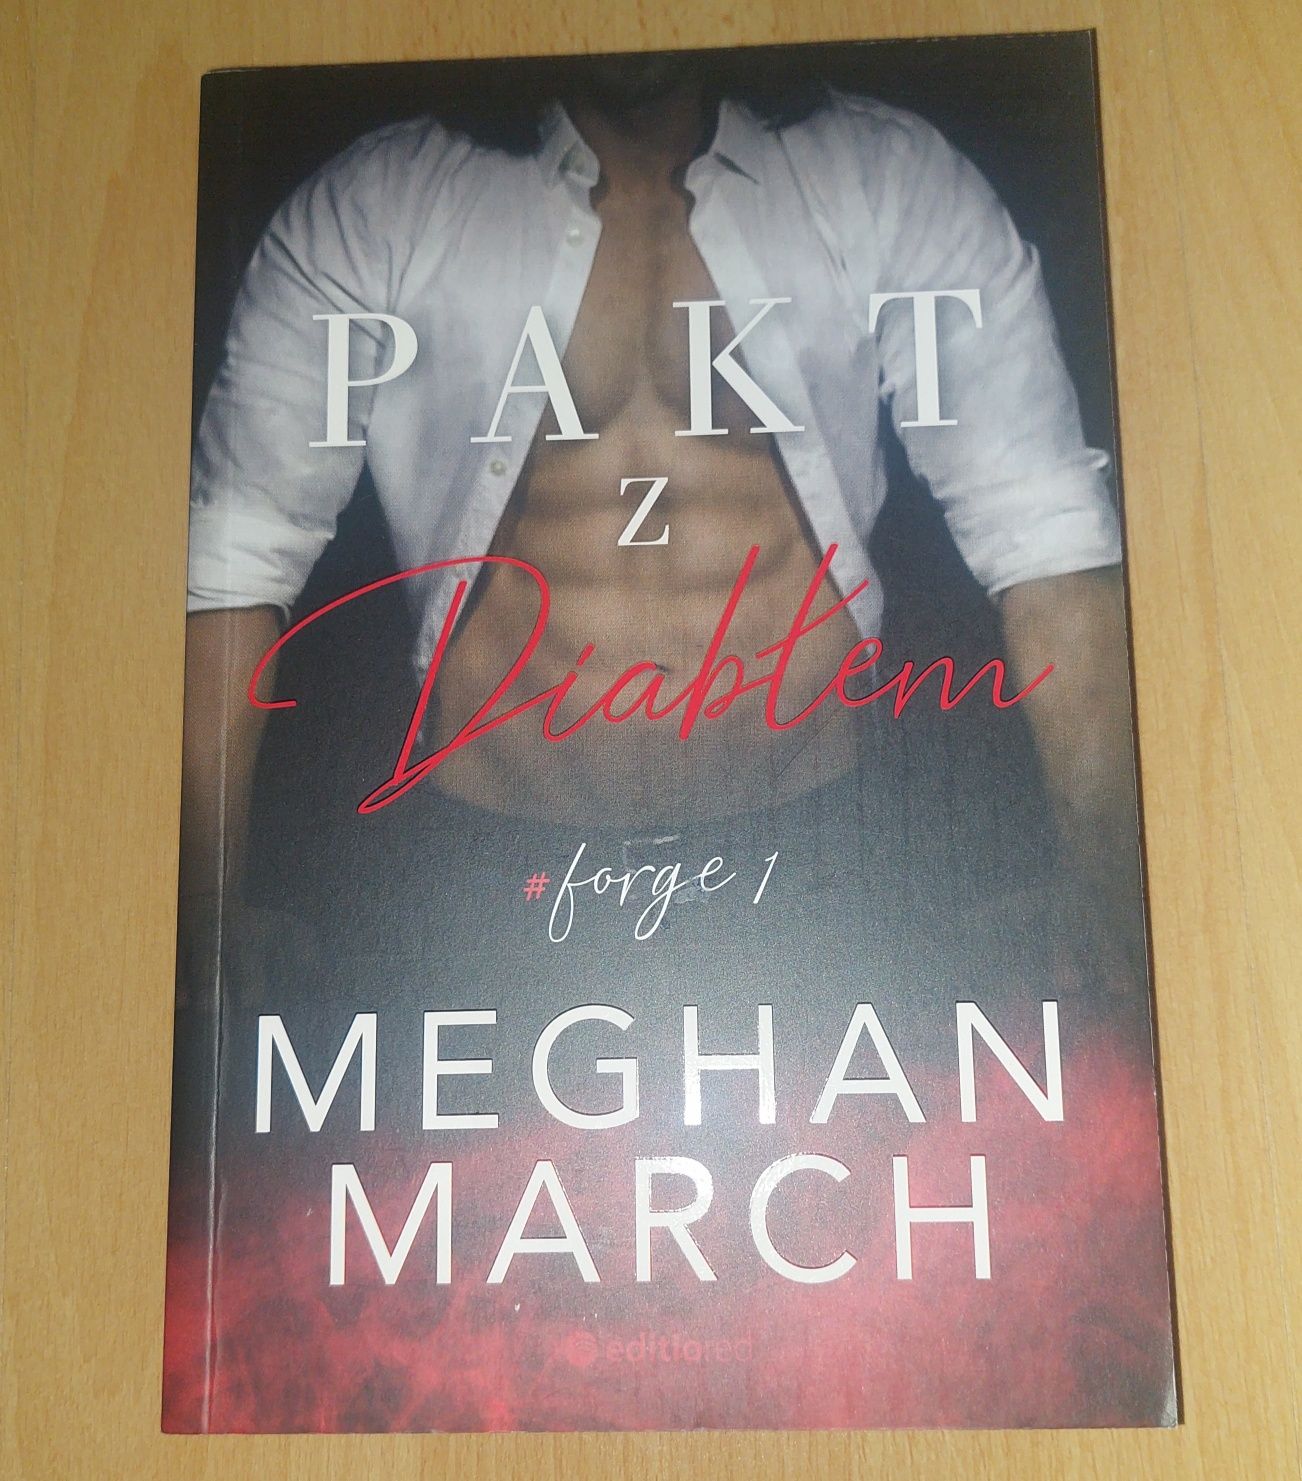 Pakt z diabłem Meghan March